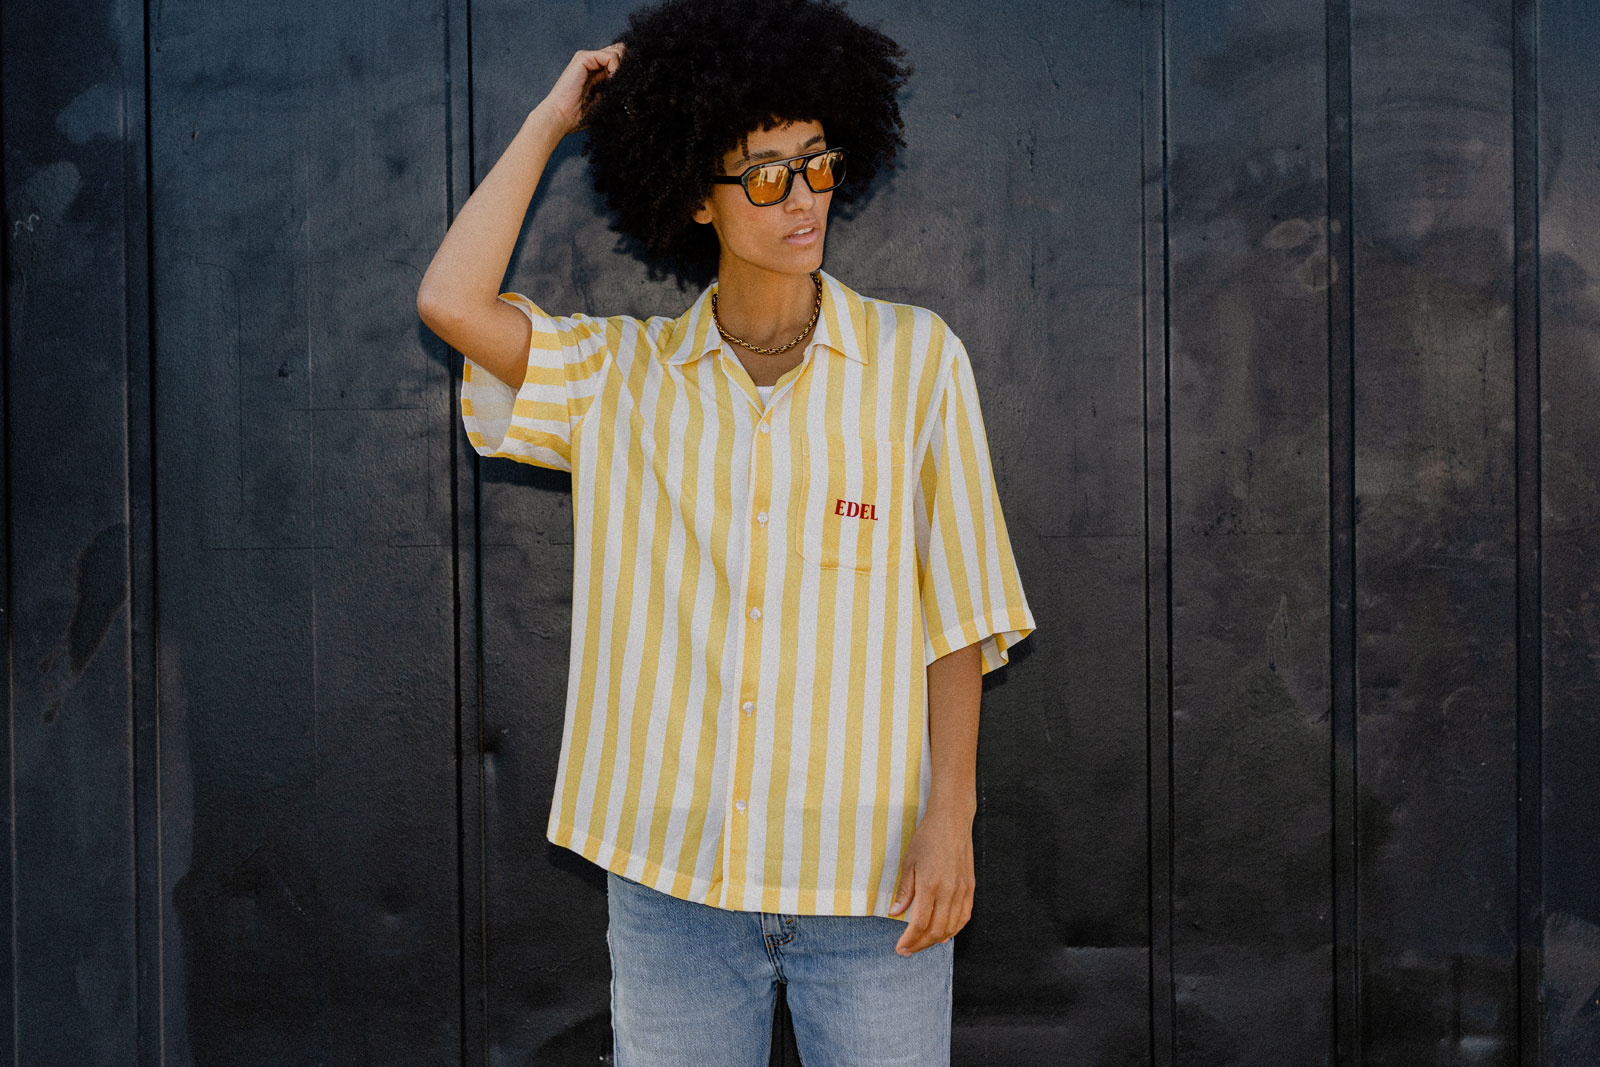 Edel Kurzarm-Hemd, Yellow Stripes